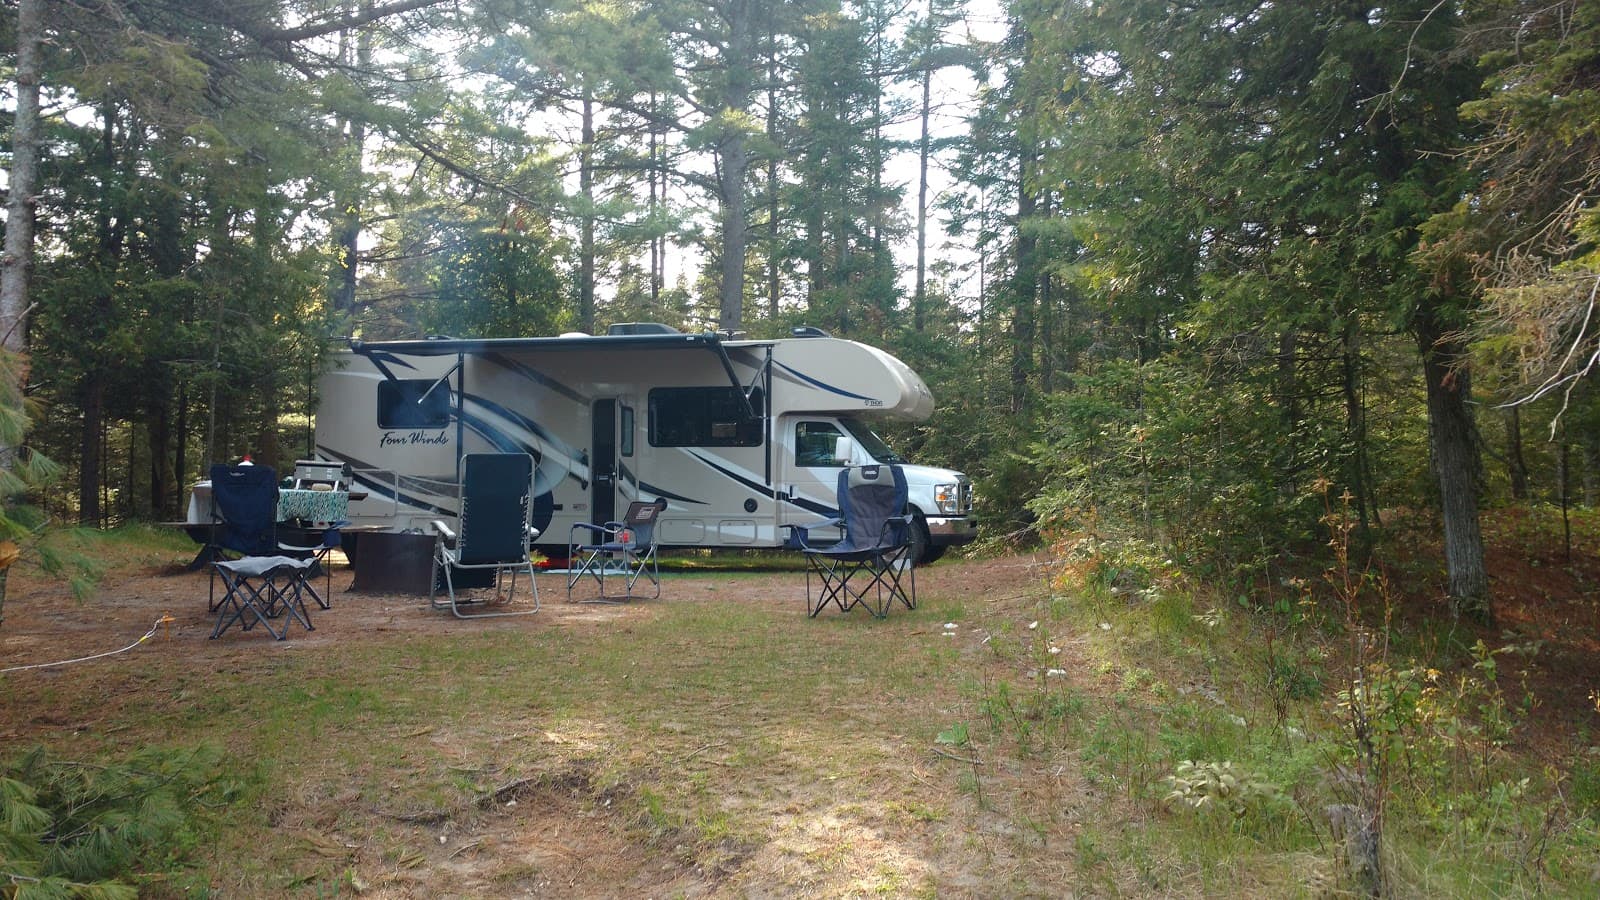 Sandee - Portage Bay Forest Campground